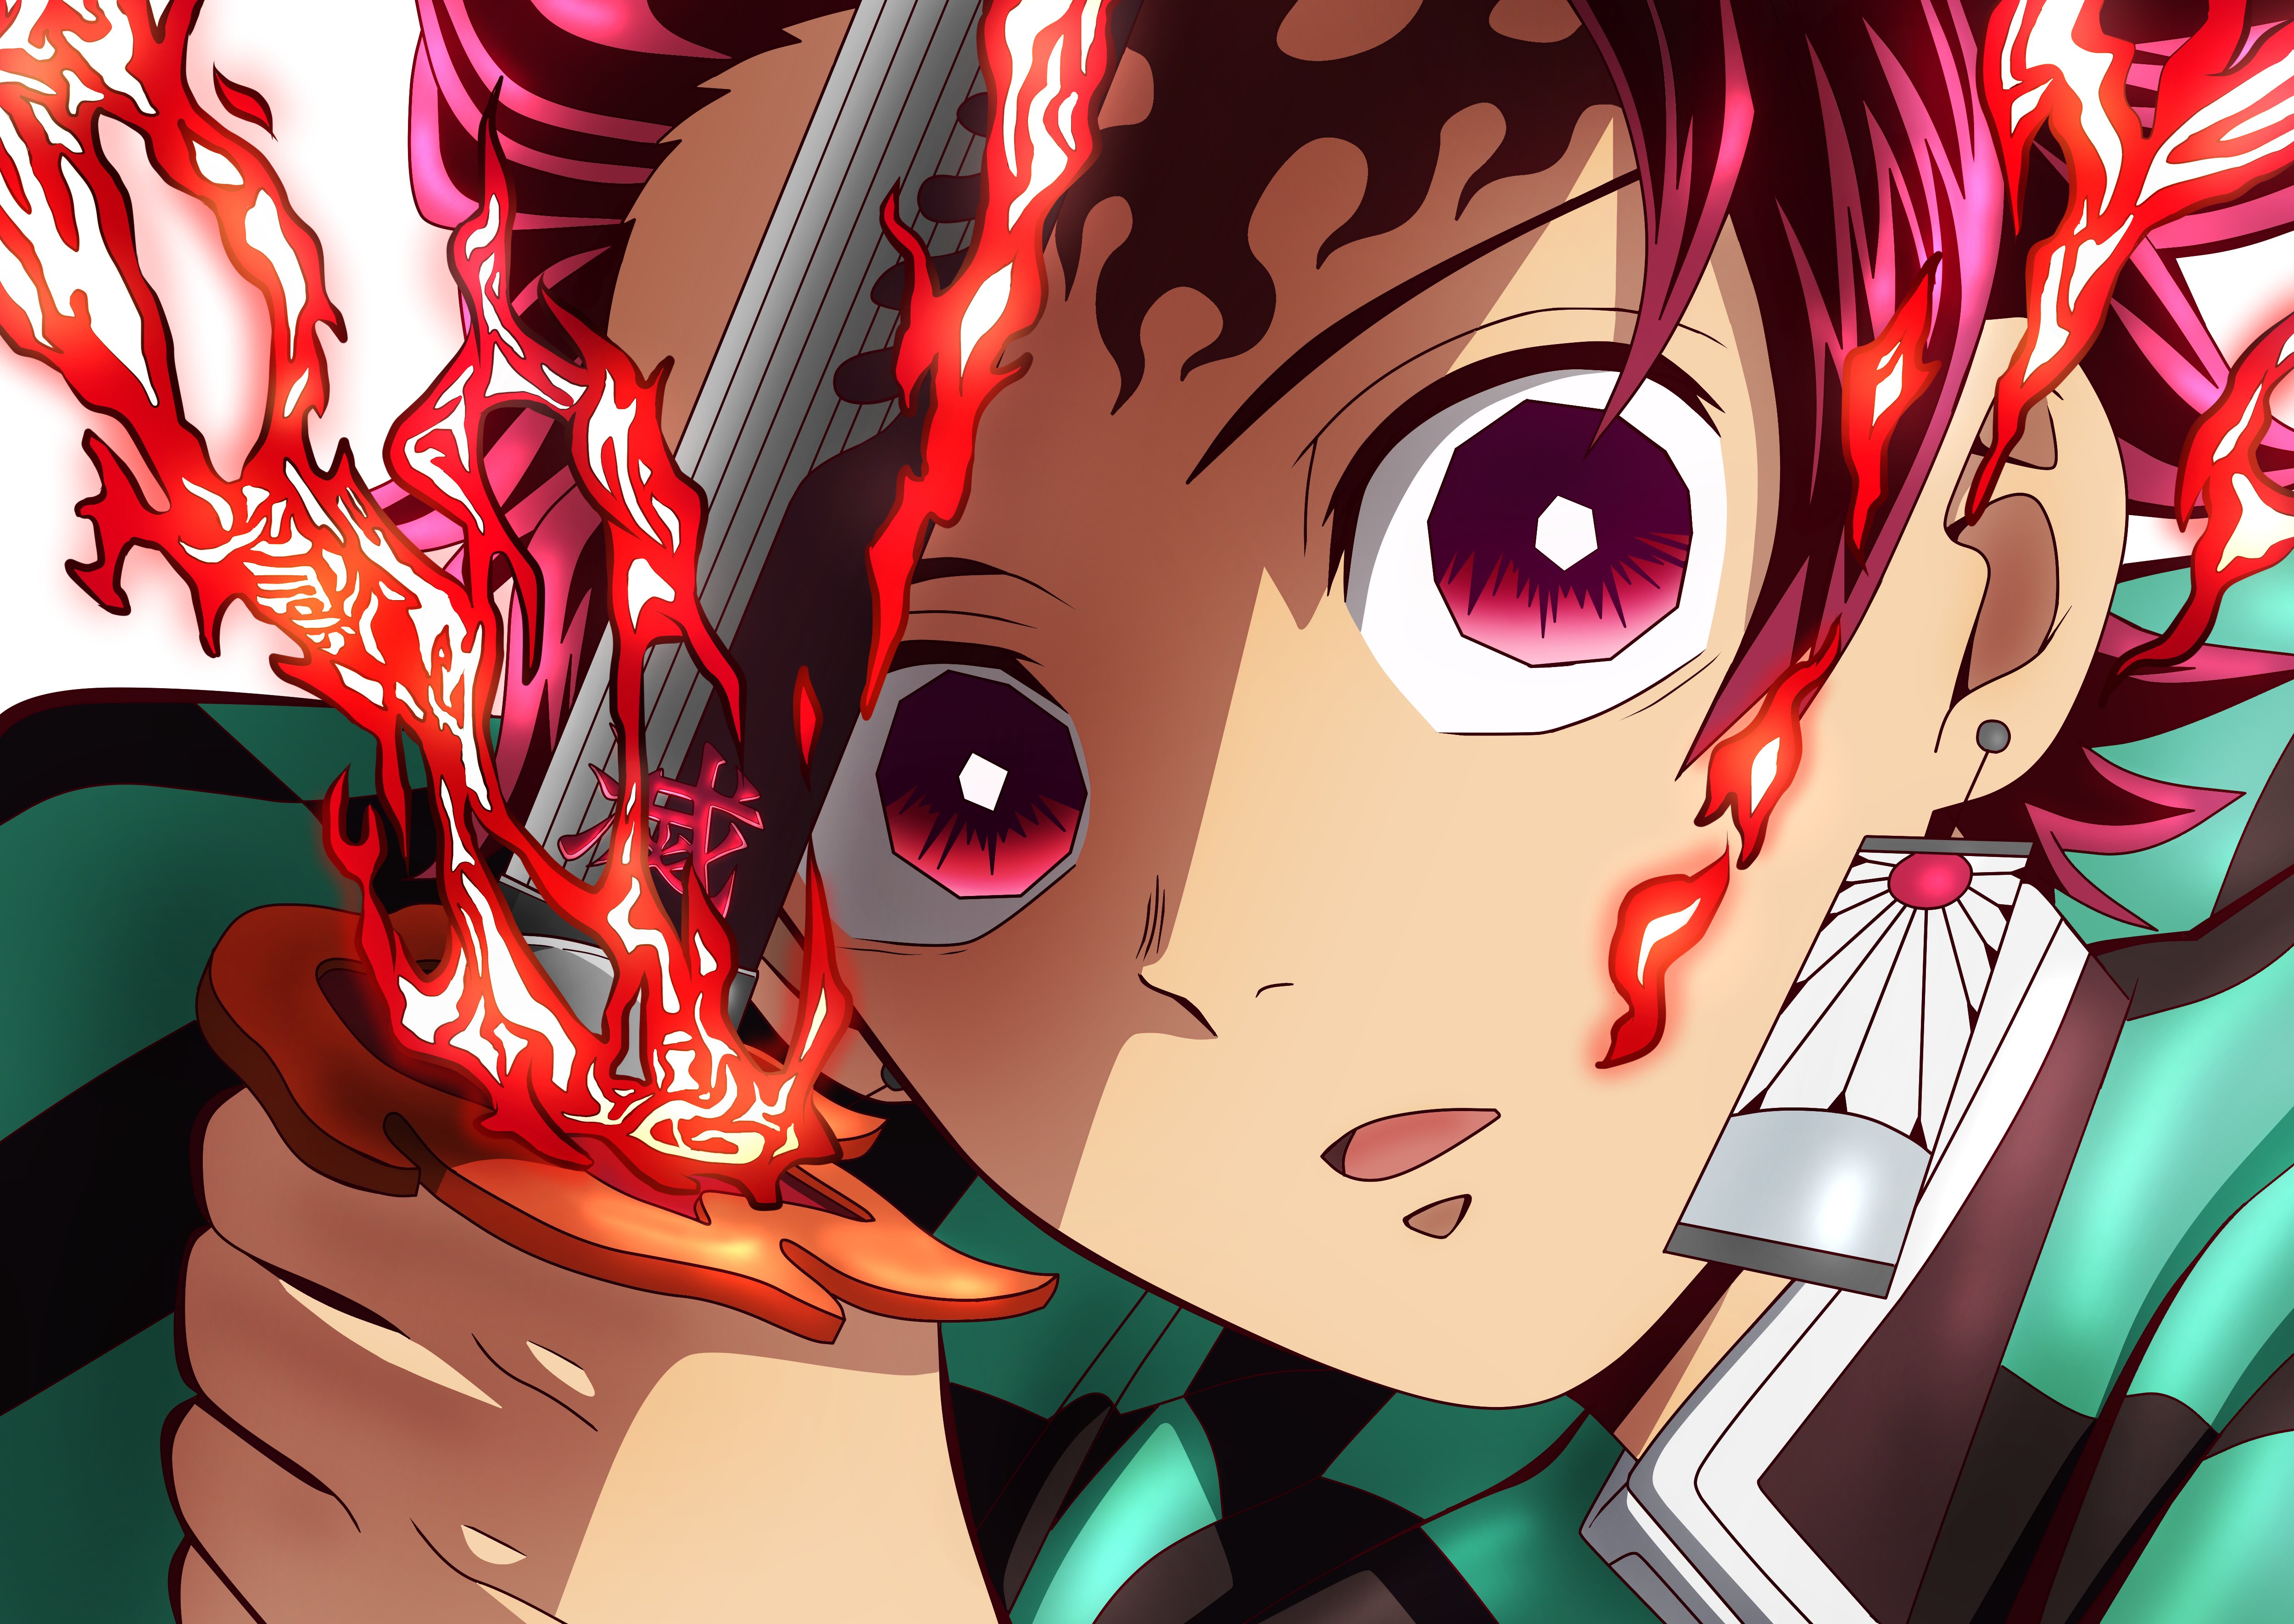 4K Demon Slayer: Kimetsu no Yaiba Wallpaper and Background Image